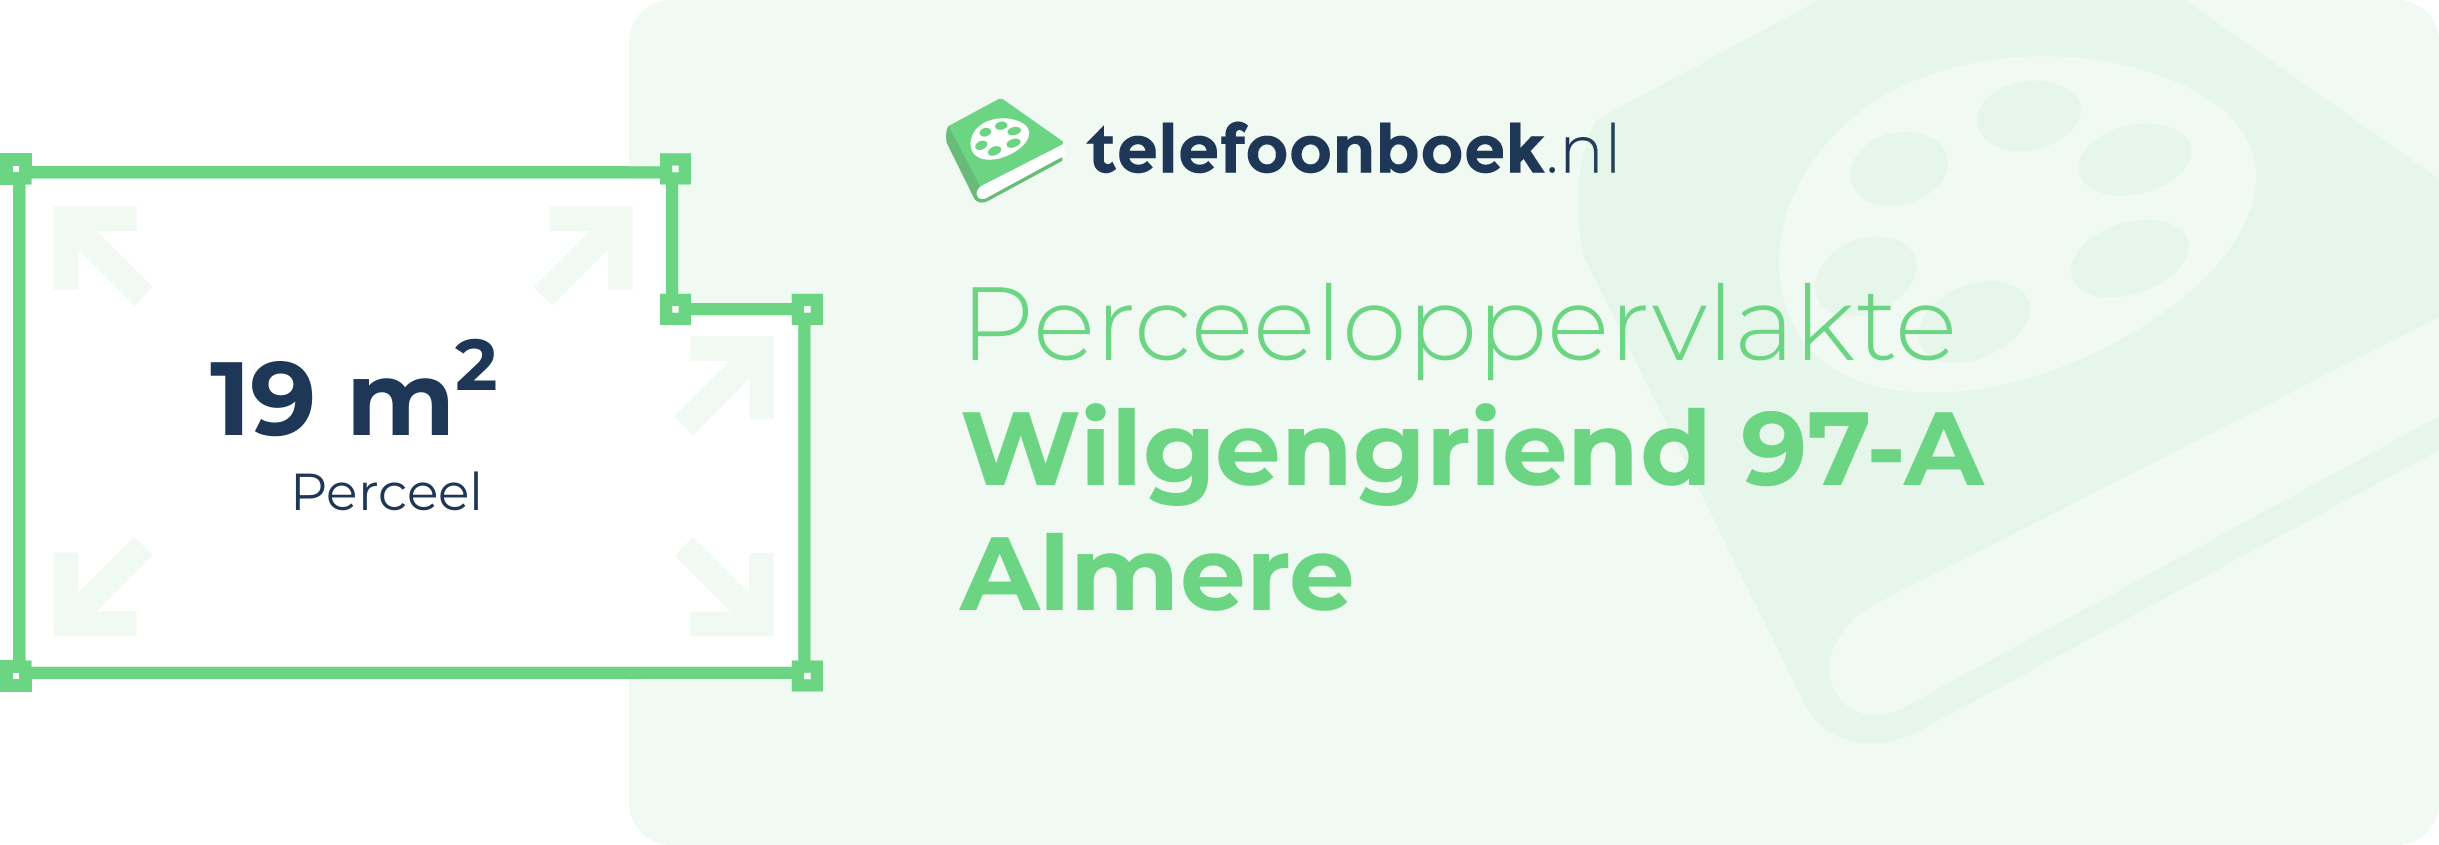 Perceeloppervlakte Wilgengriend 97-A Almere